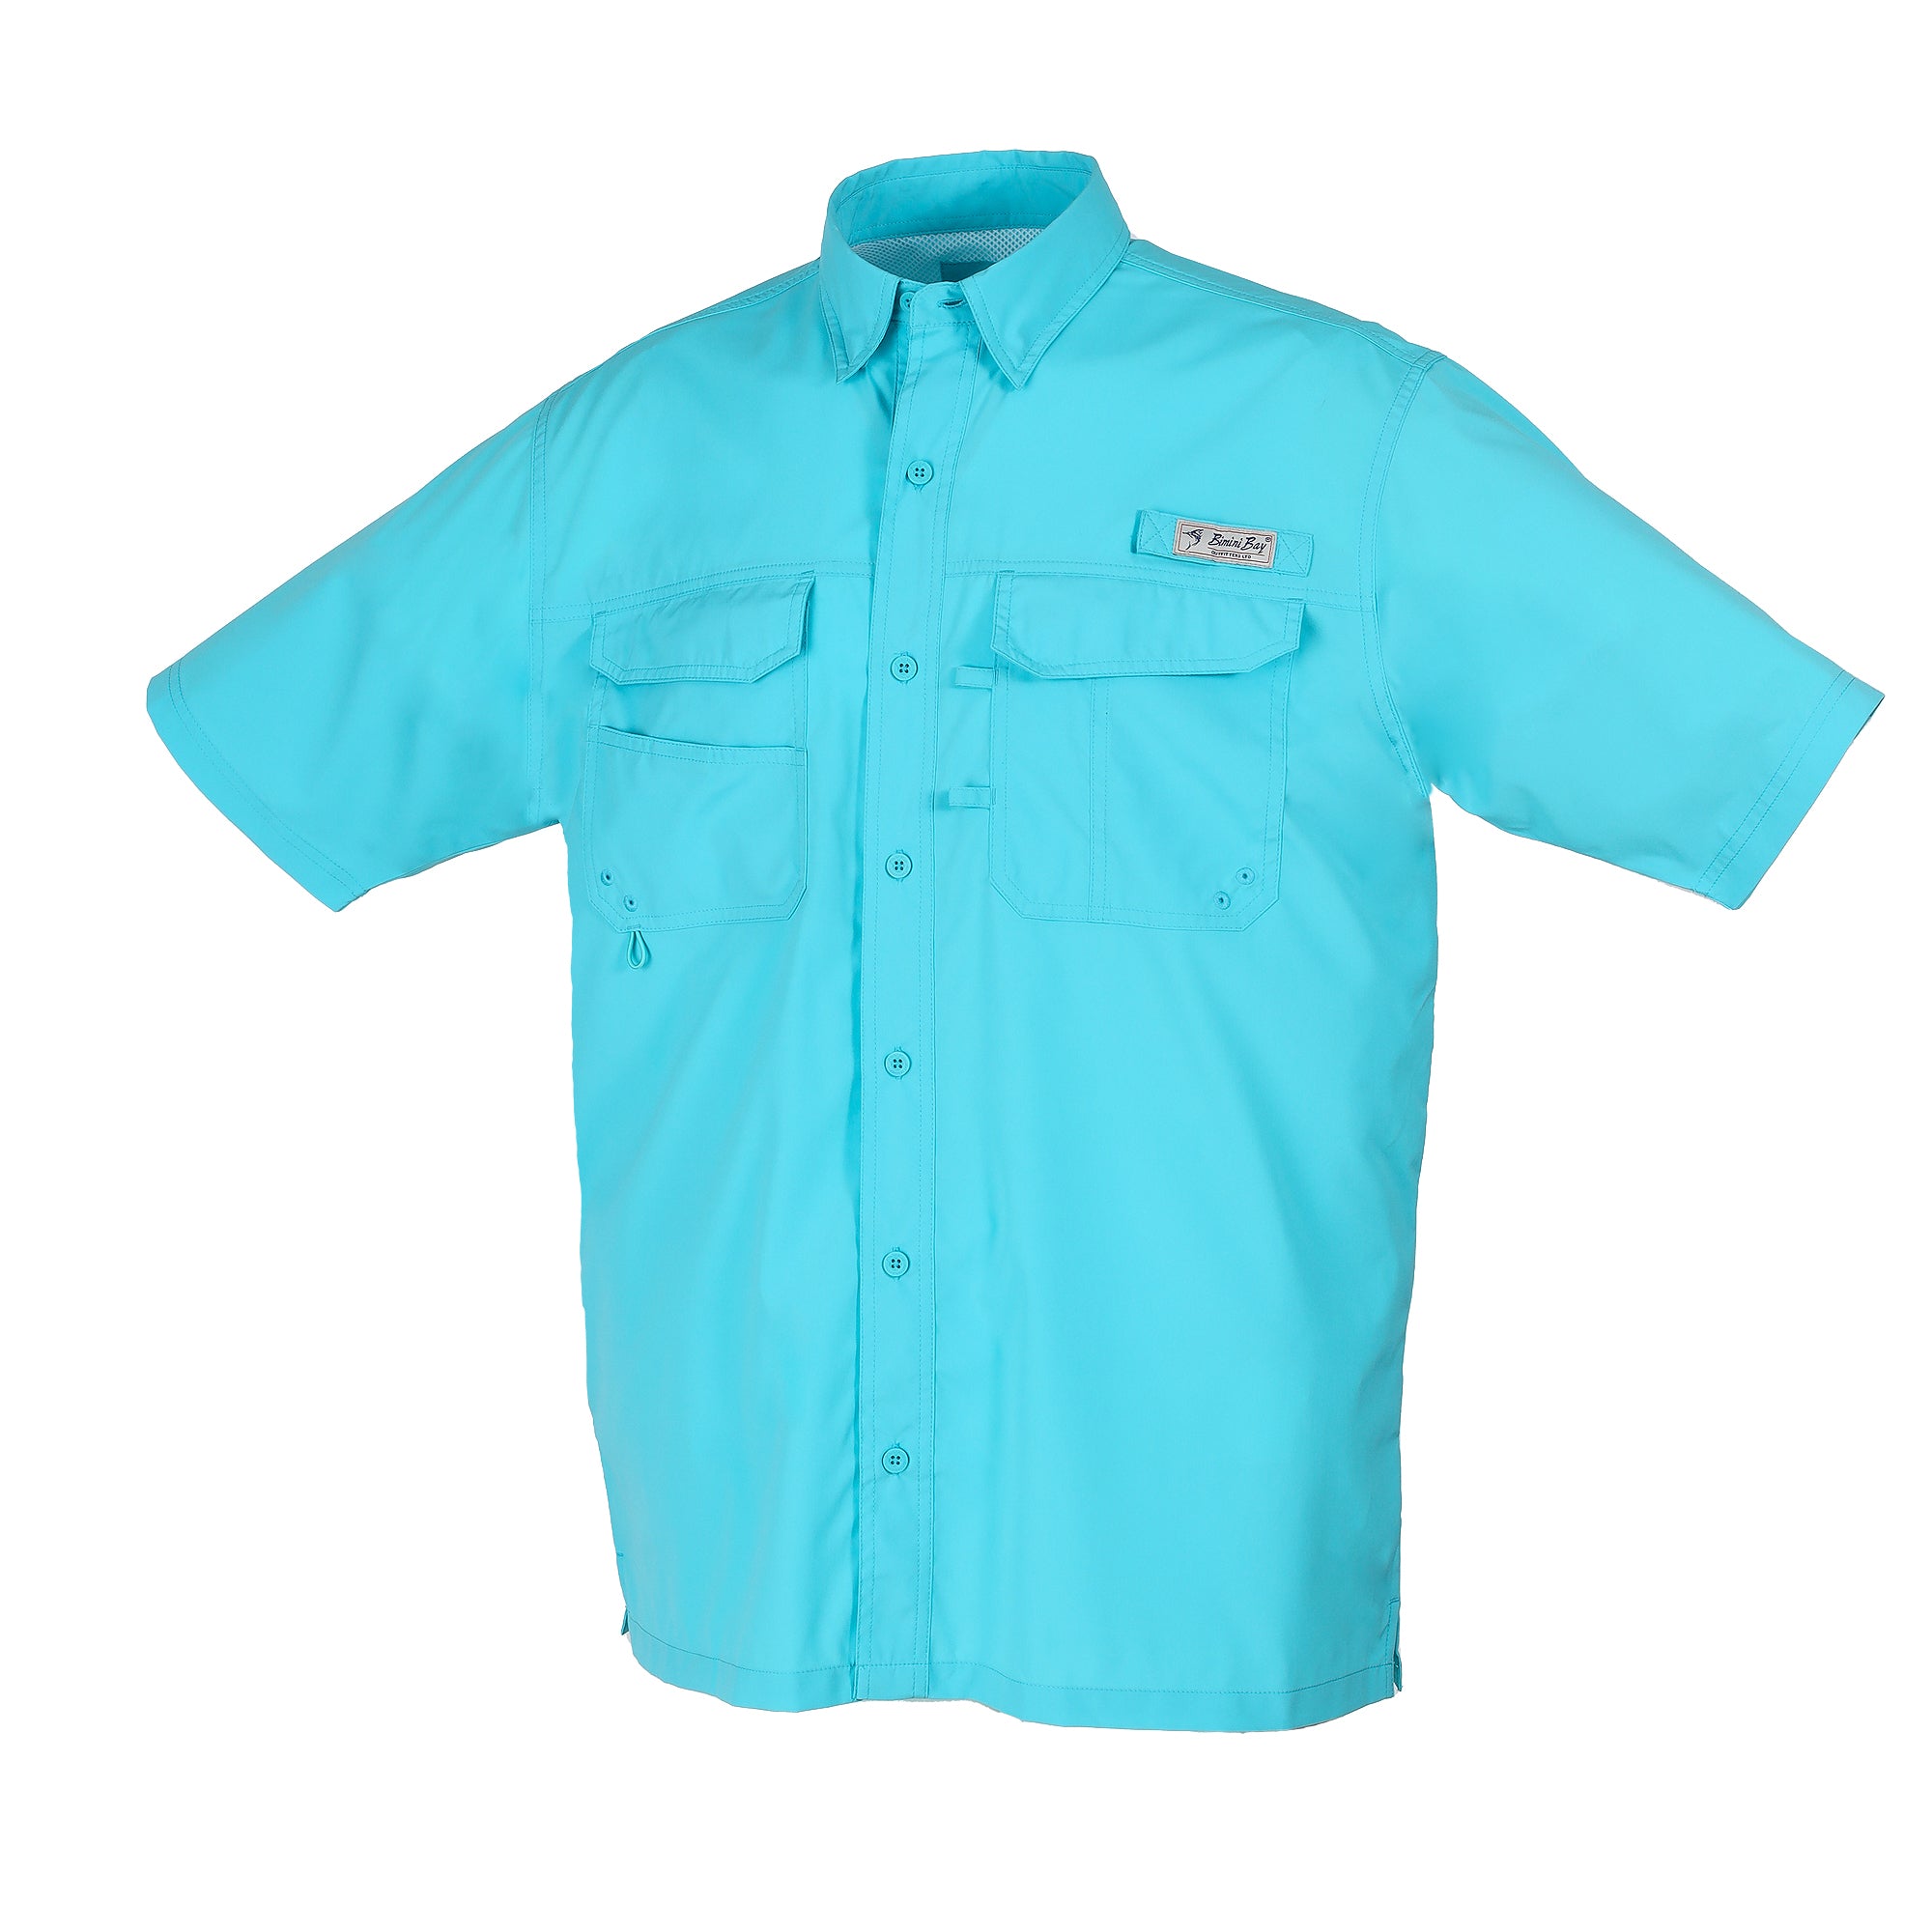 Bimini Bay Outfitters Key West Men's Short Sleeve Shirt Featuring  BloodGuard Plus